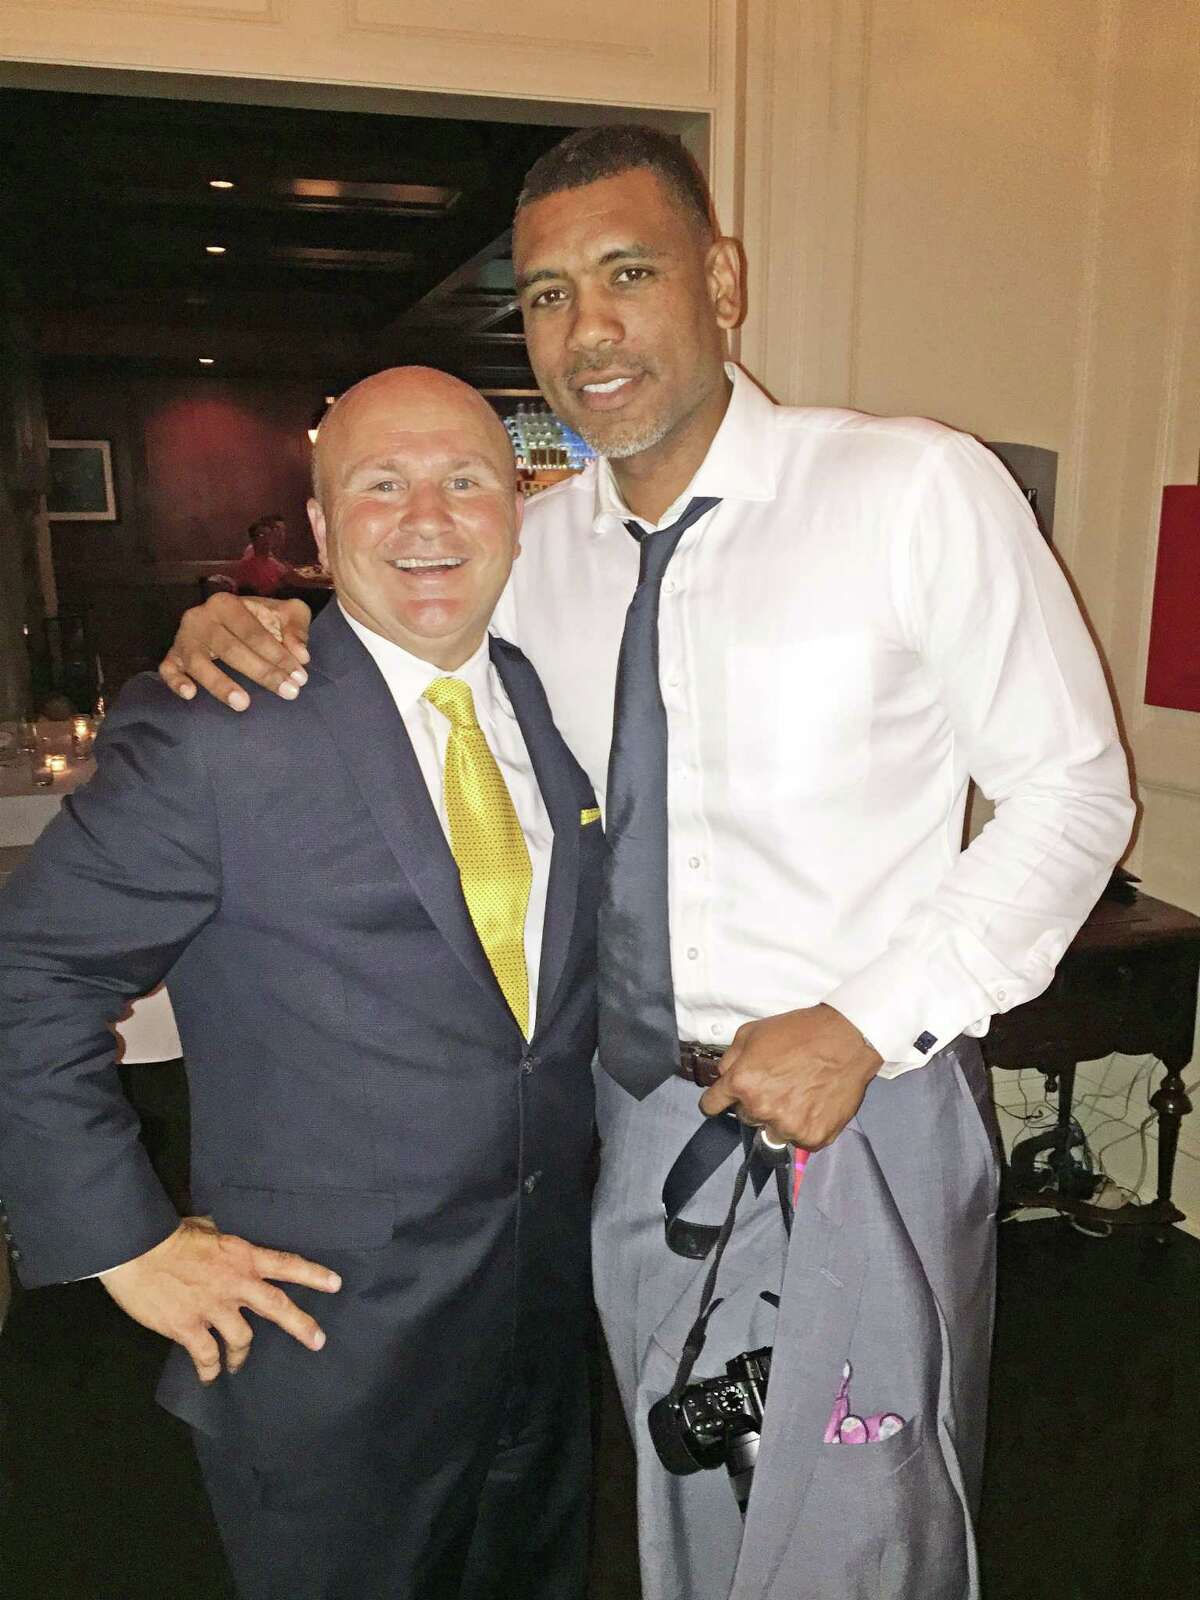 Tony Capasso, General Managing Partner of Gabriele's Italian Steakhouse in Greenwich with former NBA star Allan Houston.